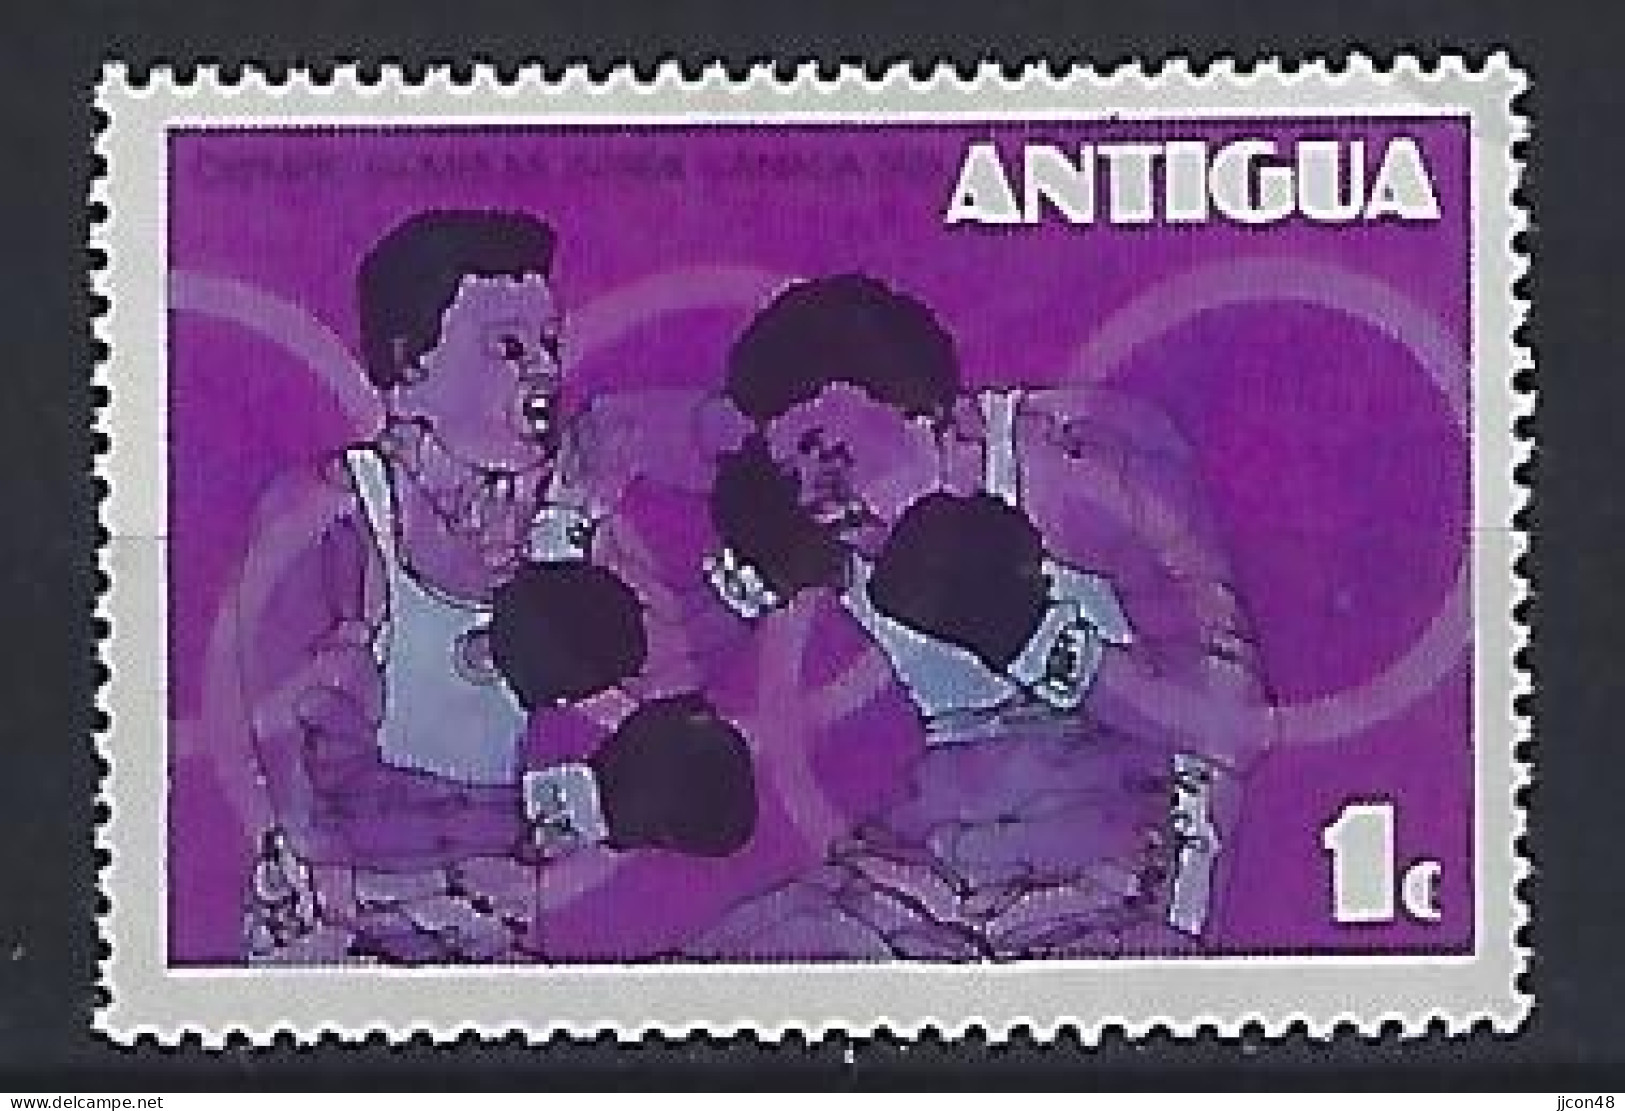 Antigua 1976  Olympic Games, Montreal (*) MM - 1960-1981 Autonomie Interne